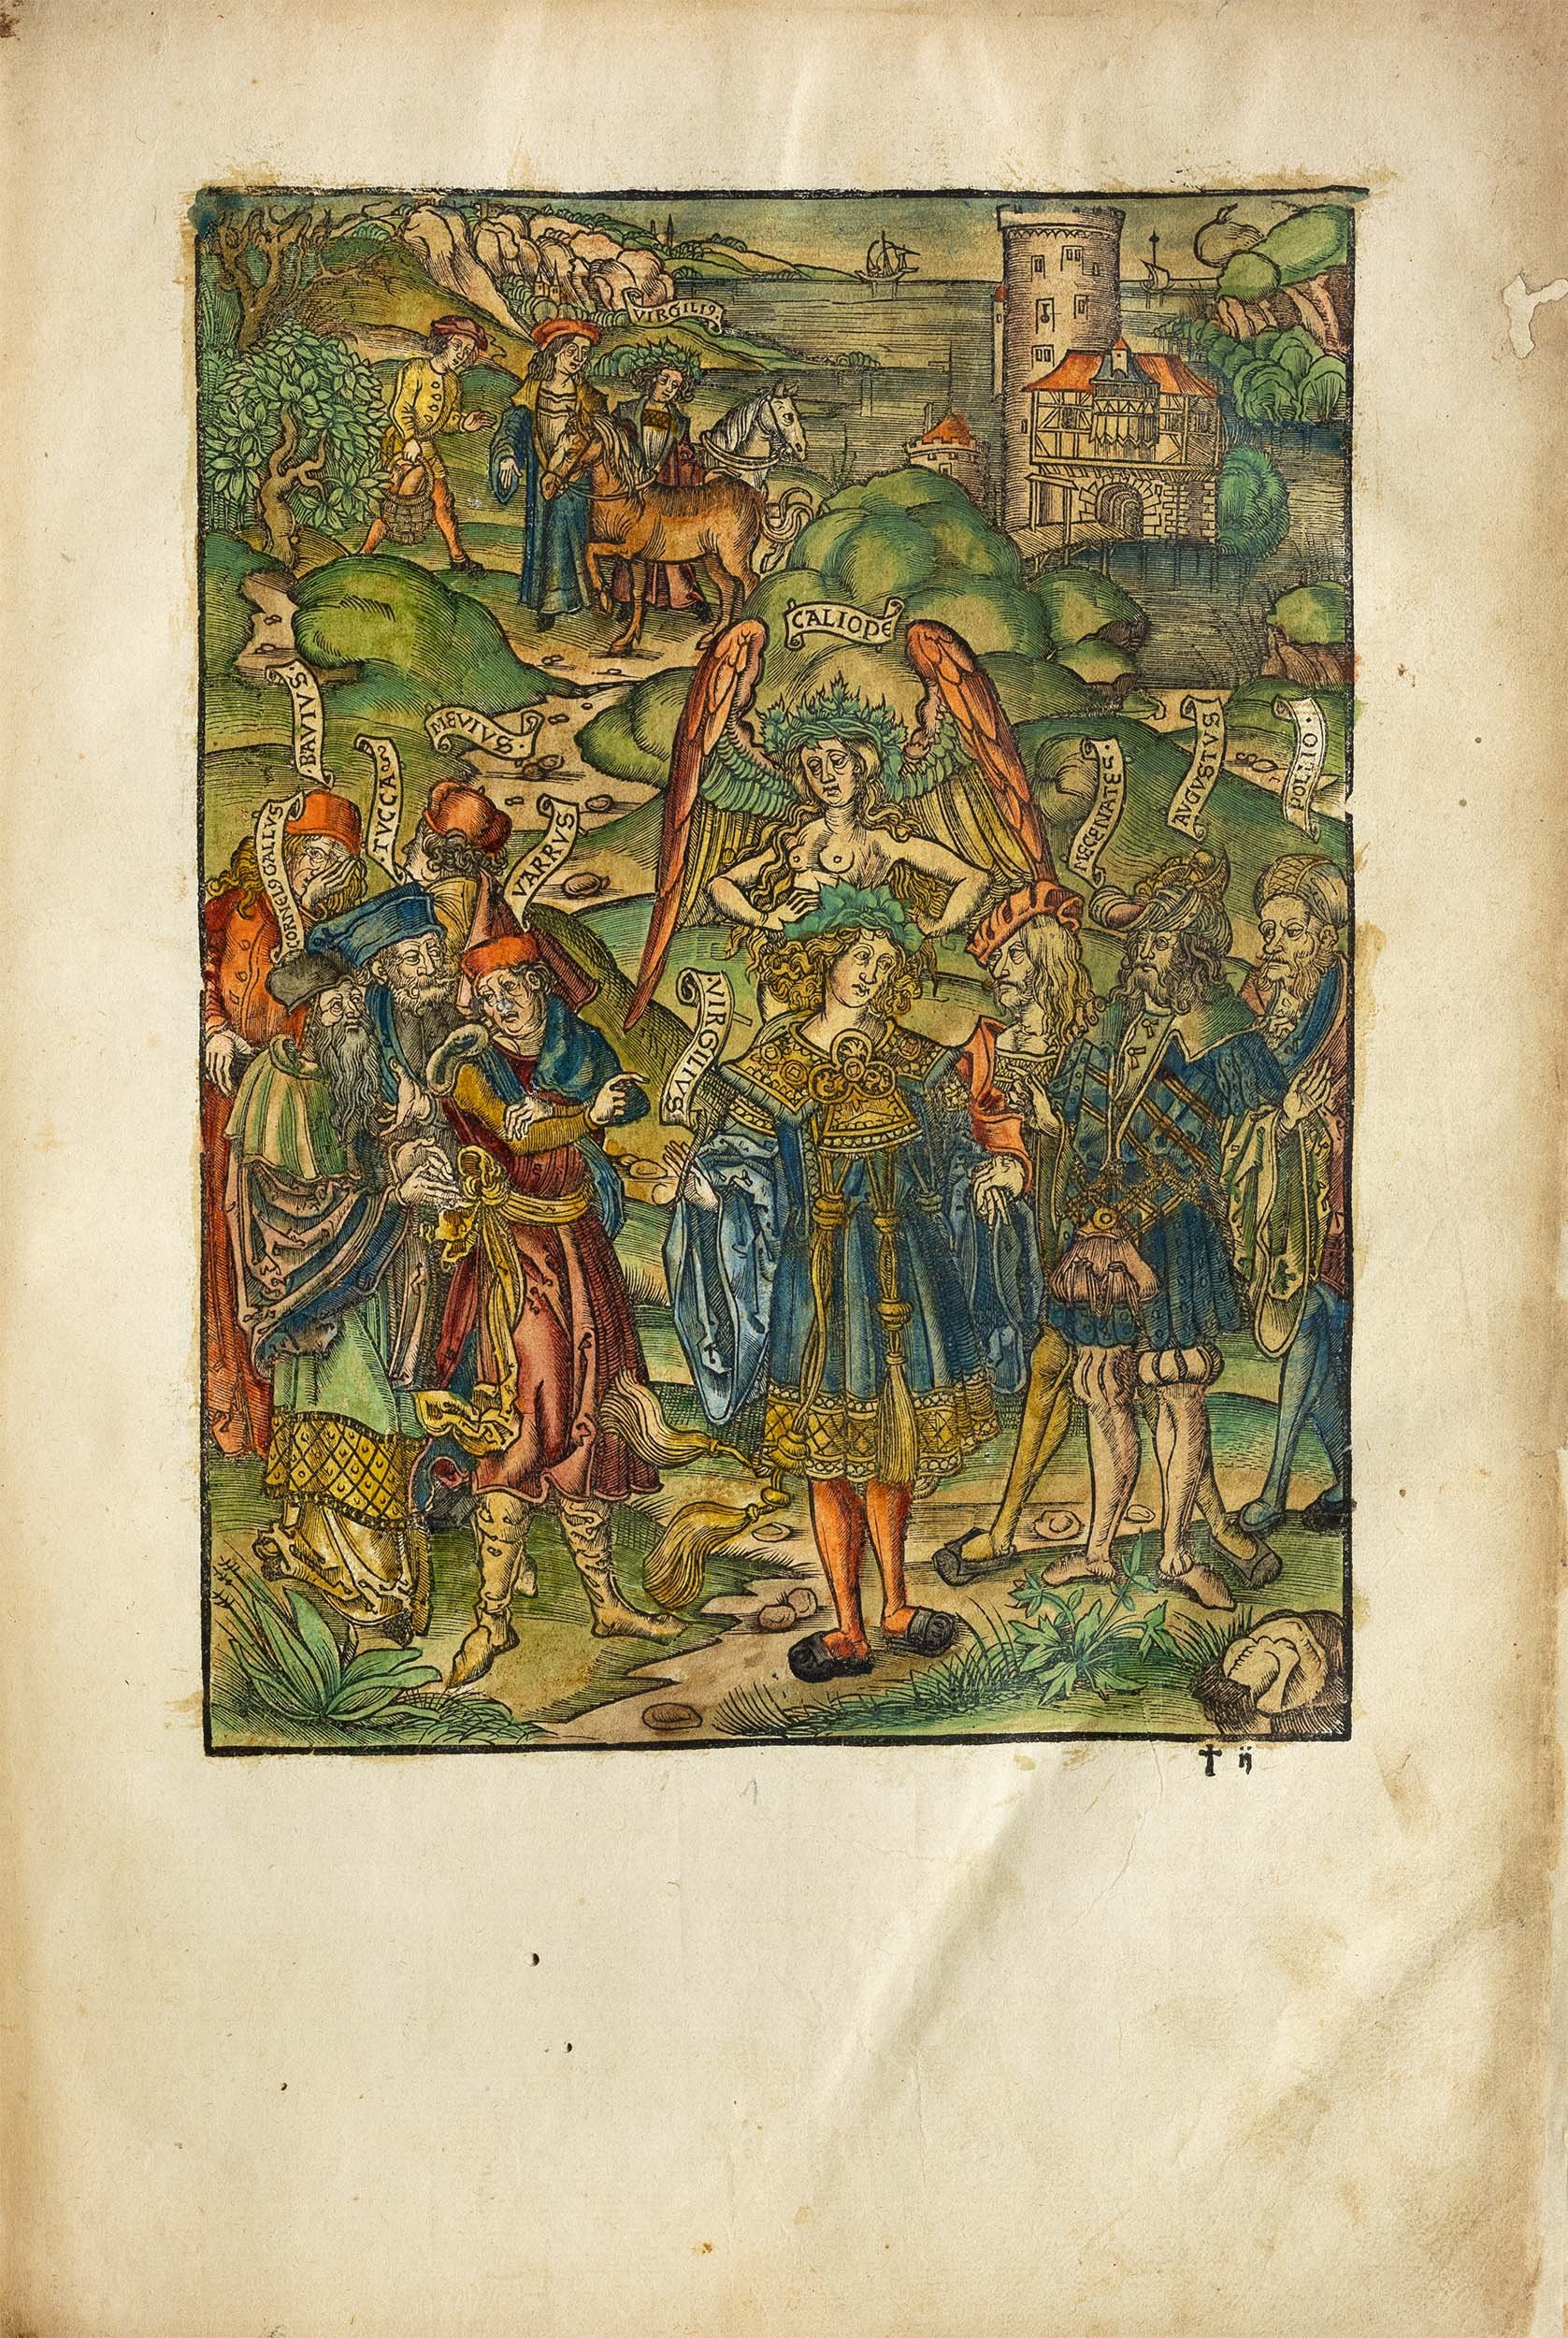 vergil-opera-1517-lyon-hand-coloured-woodcuts-for-sale-2.jpg